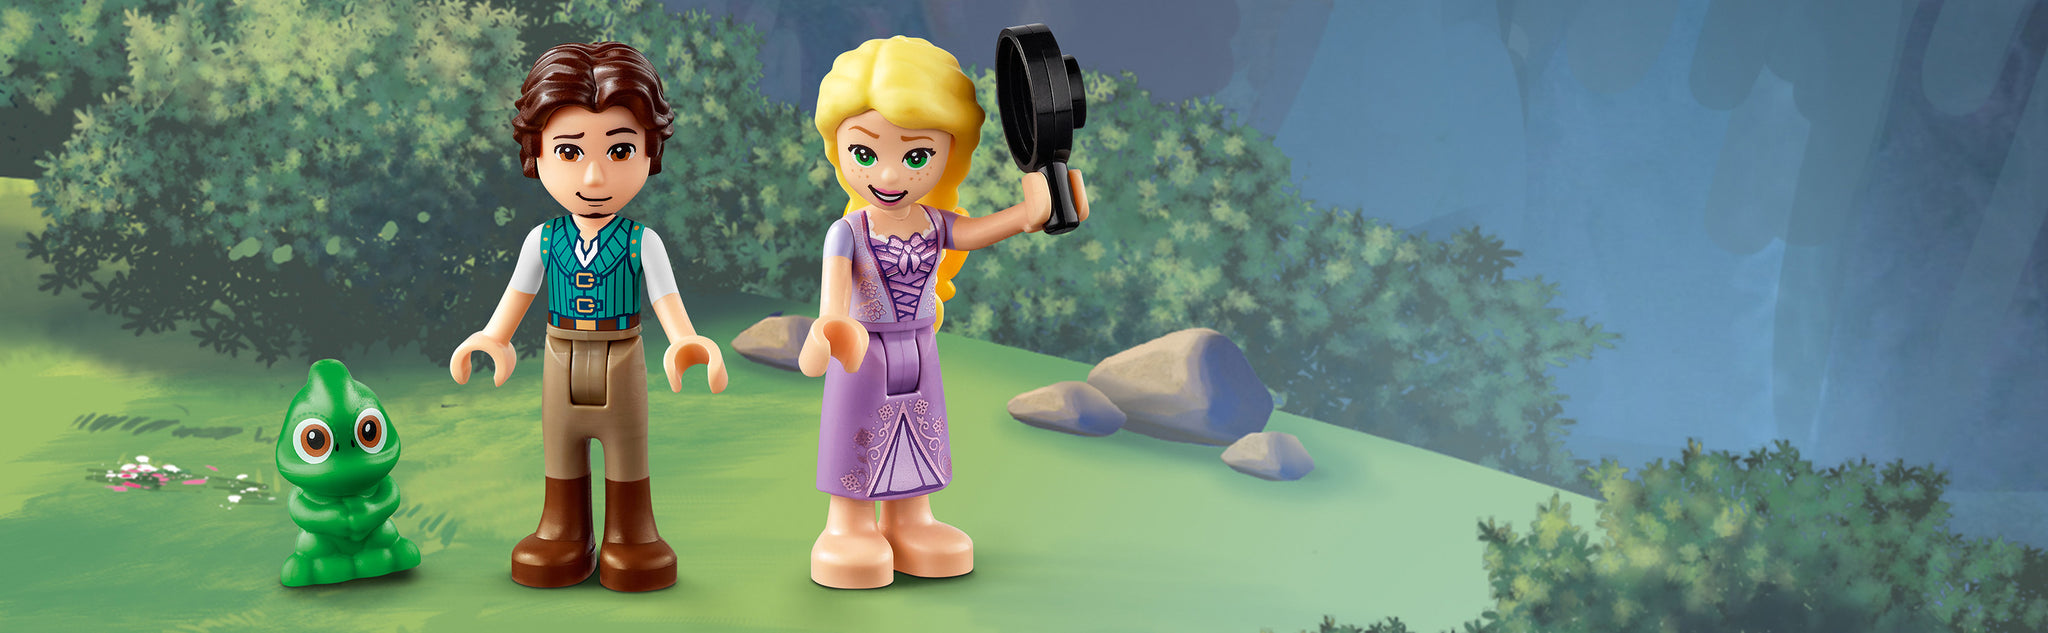 LEGO 43187 Rapunzel's Tower Fairy Tales